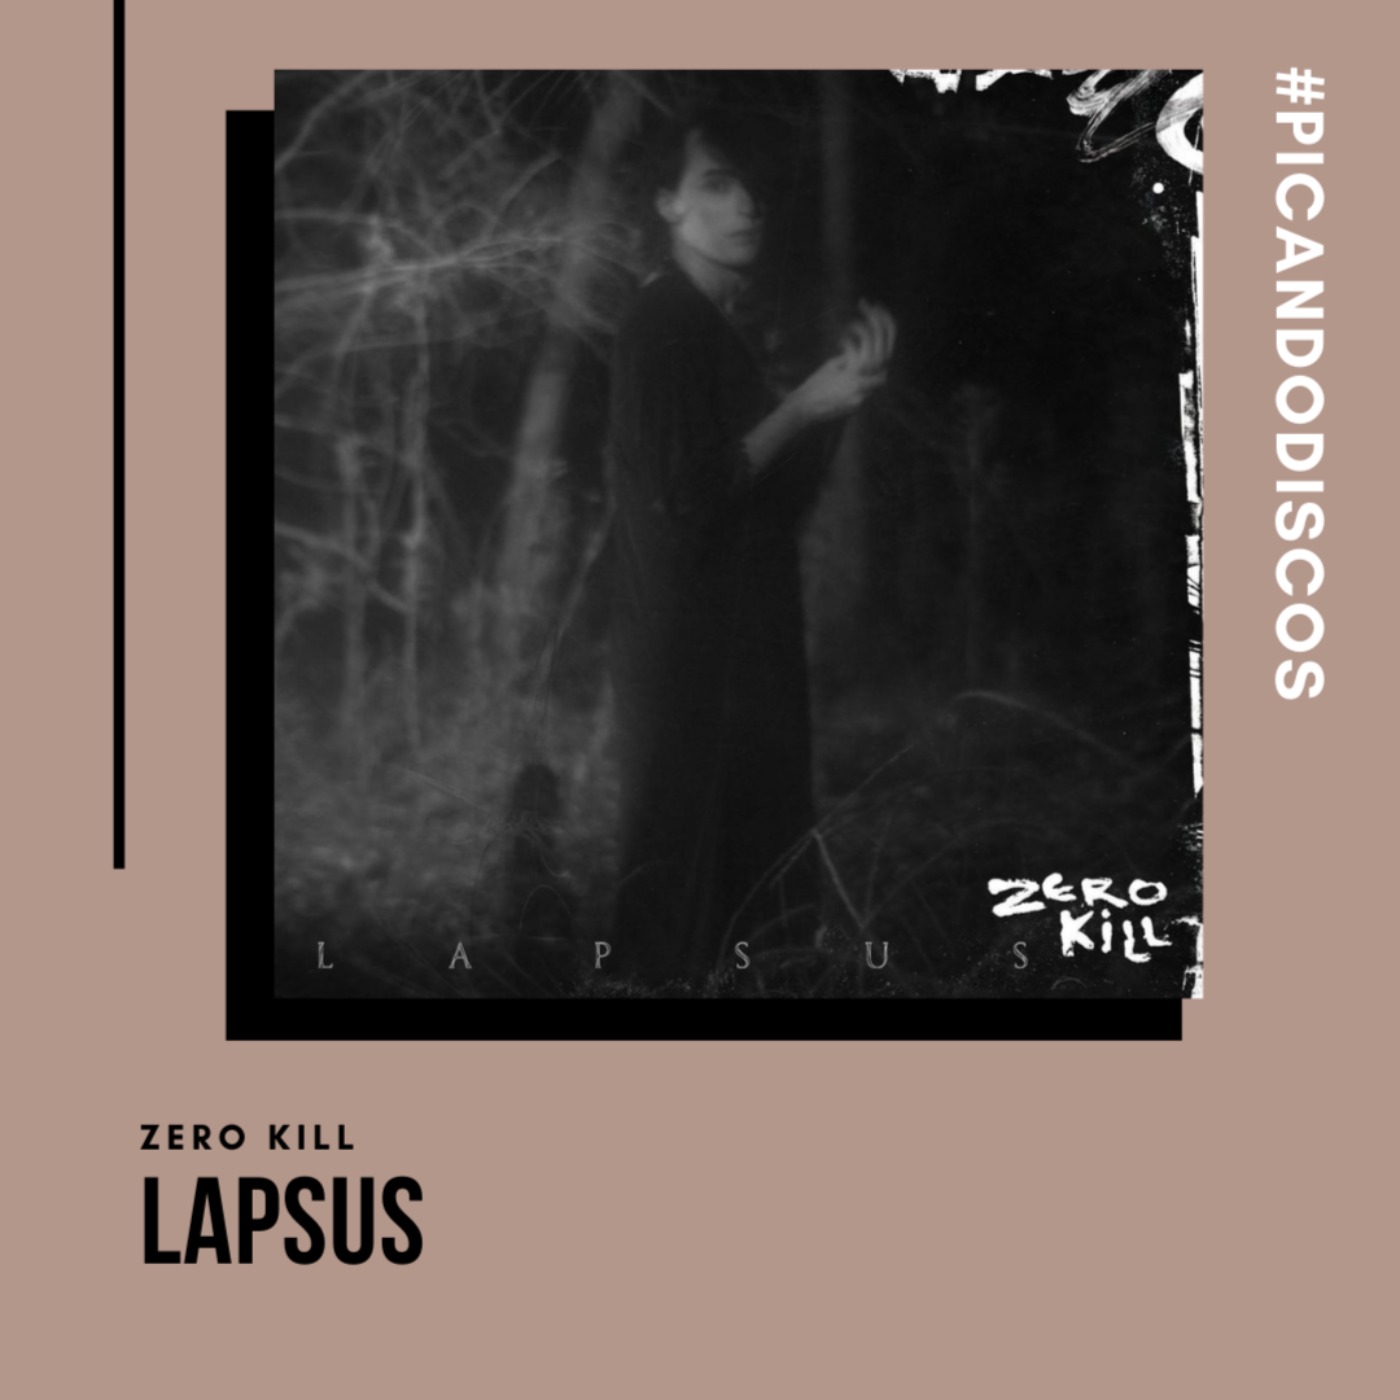 cover art for "Lapsus", Zero Kill